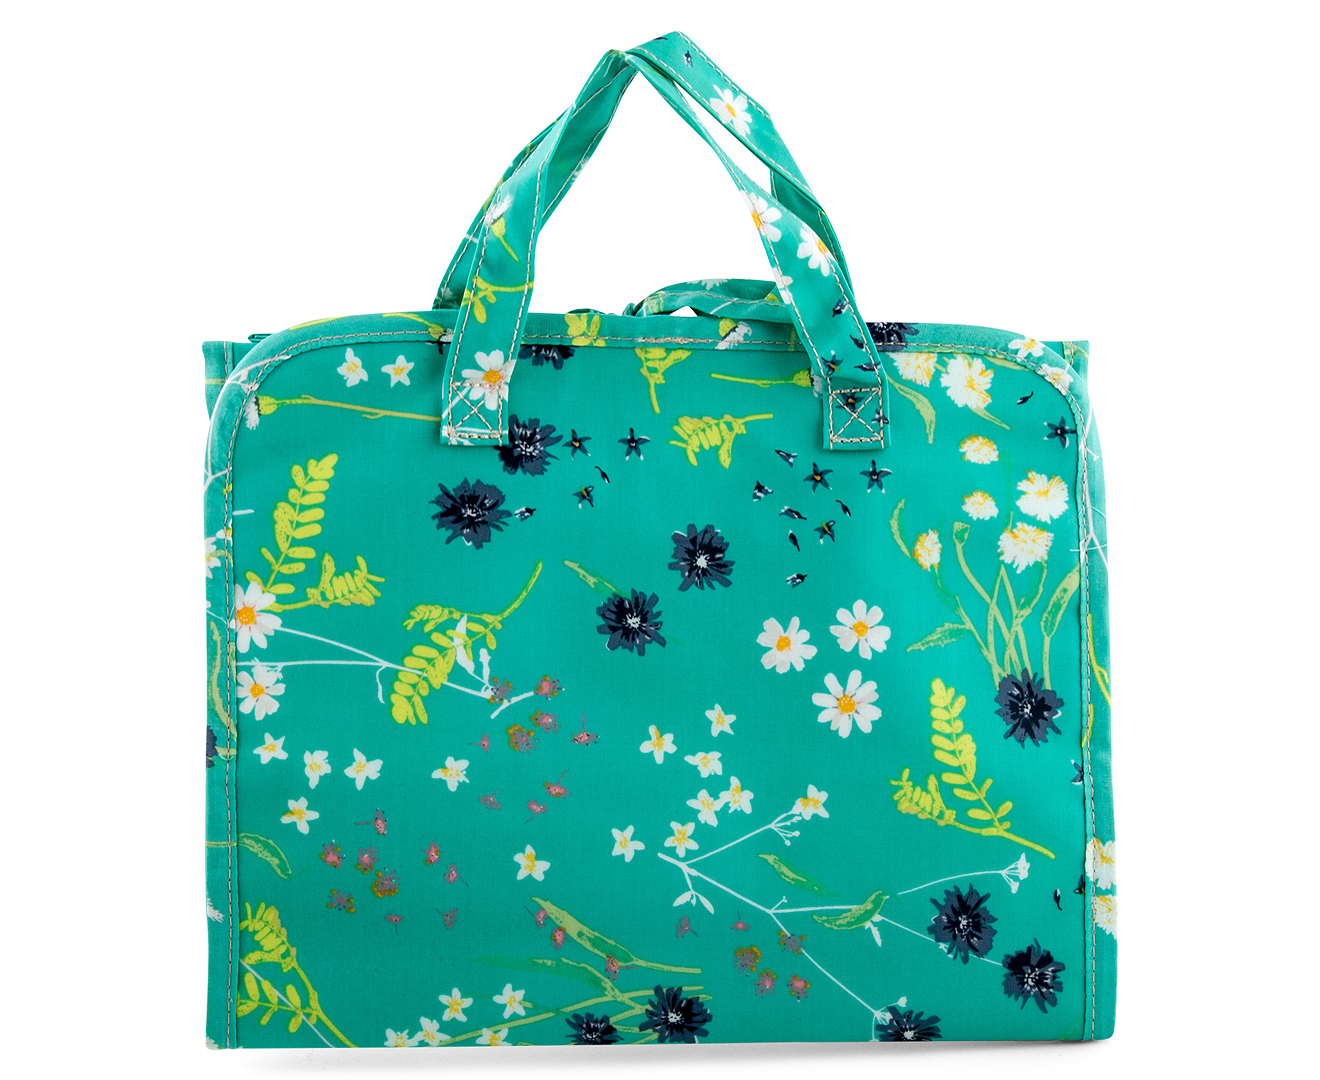 Tonic Hanging Cosmetics Bag - Whimsy Sea Geen | GroceryRun.com.au